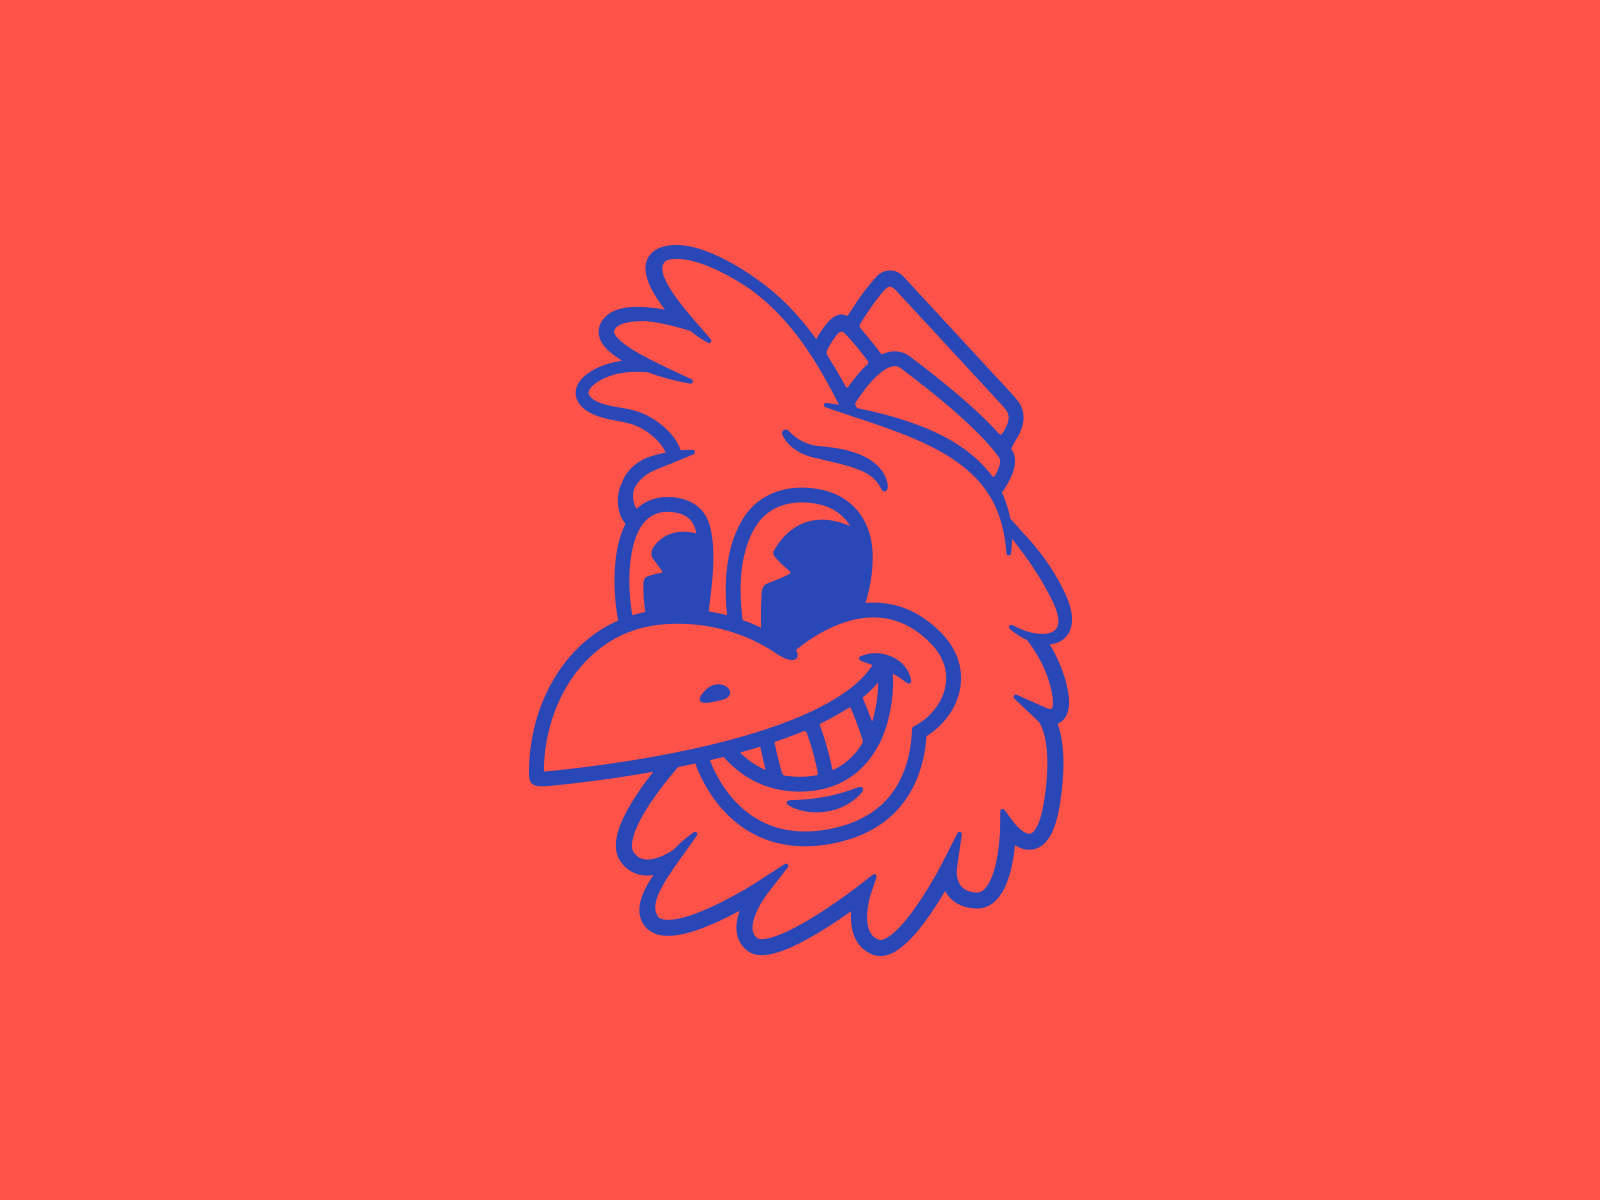 Winking Chicken by Steven Roberts on Dribbble